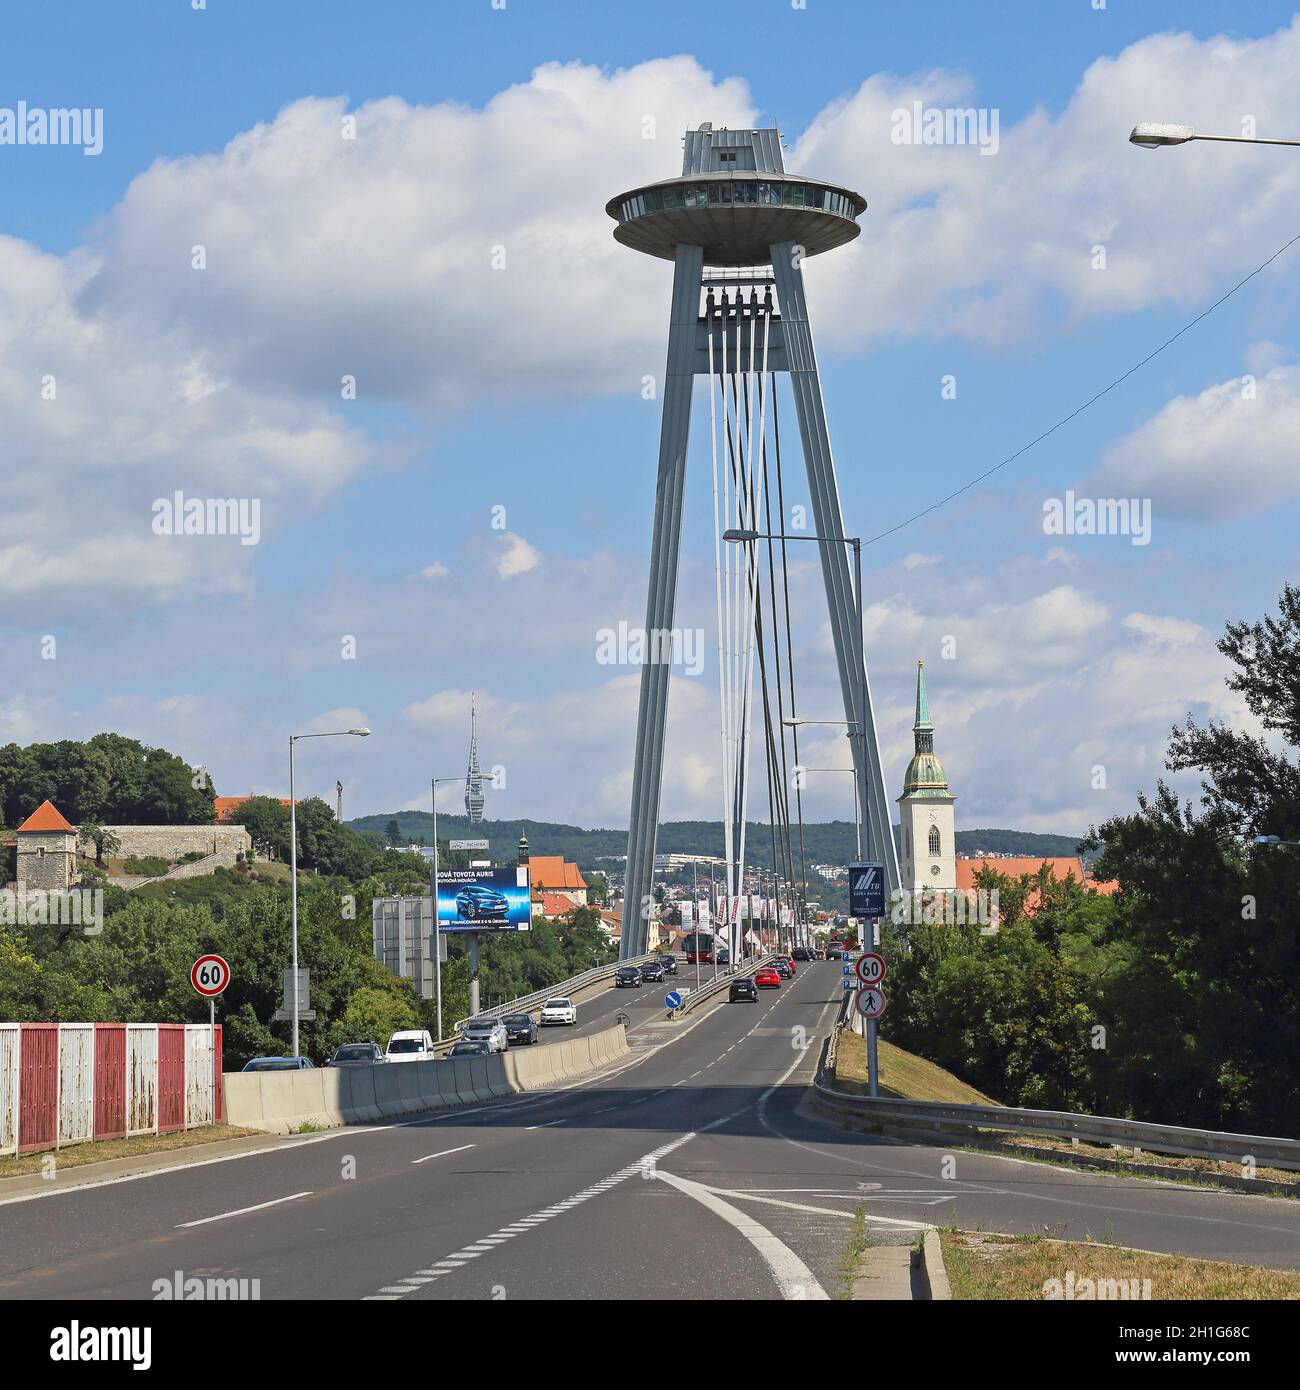 Bratislava, Slovakia - July 10, 2015: Famous SNP Bridge Landmark With Restaurant on Top of Pylon in Bratislava, Slovakia. Stock Photo